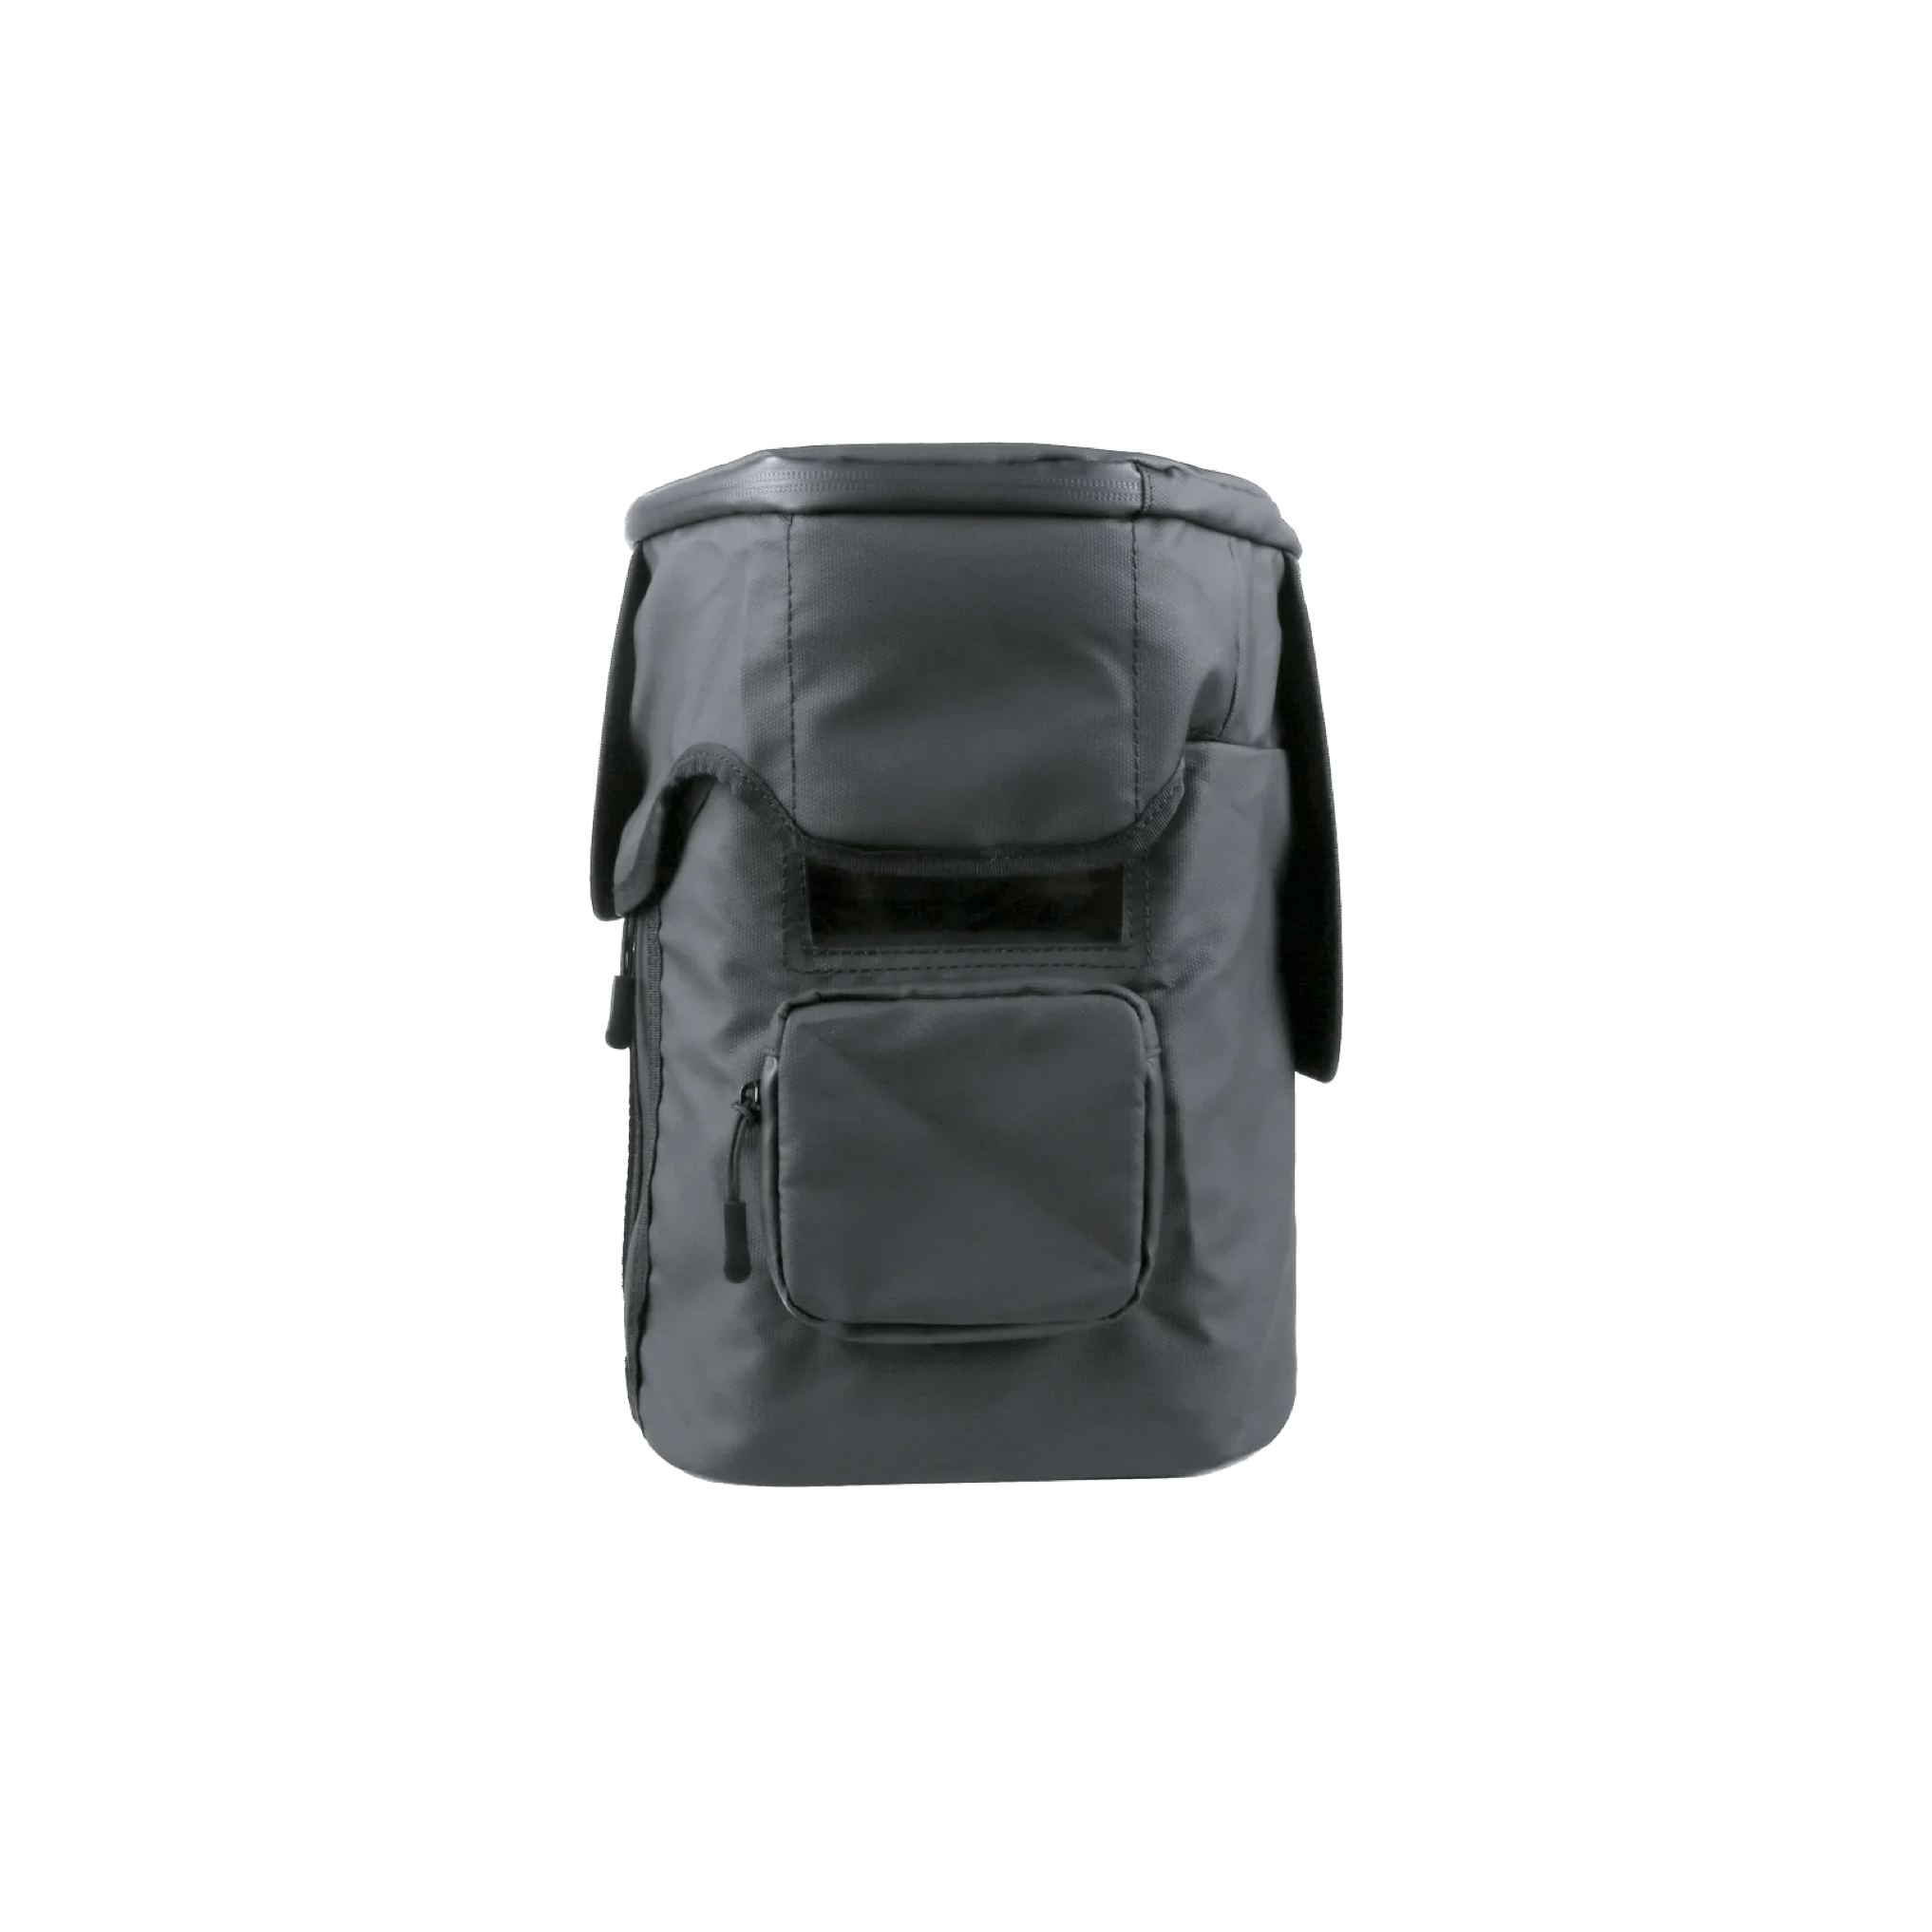 EcoFlow EcoFlow DELTA 2 Waterproof Bag Accessory